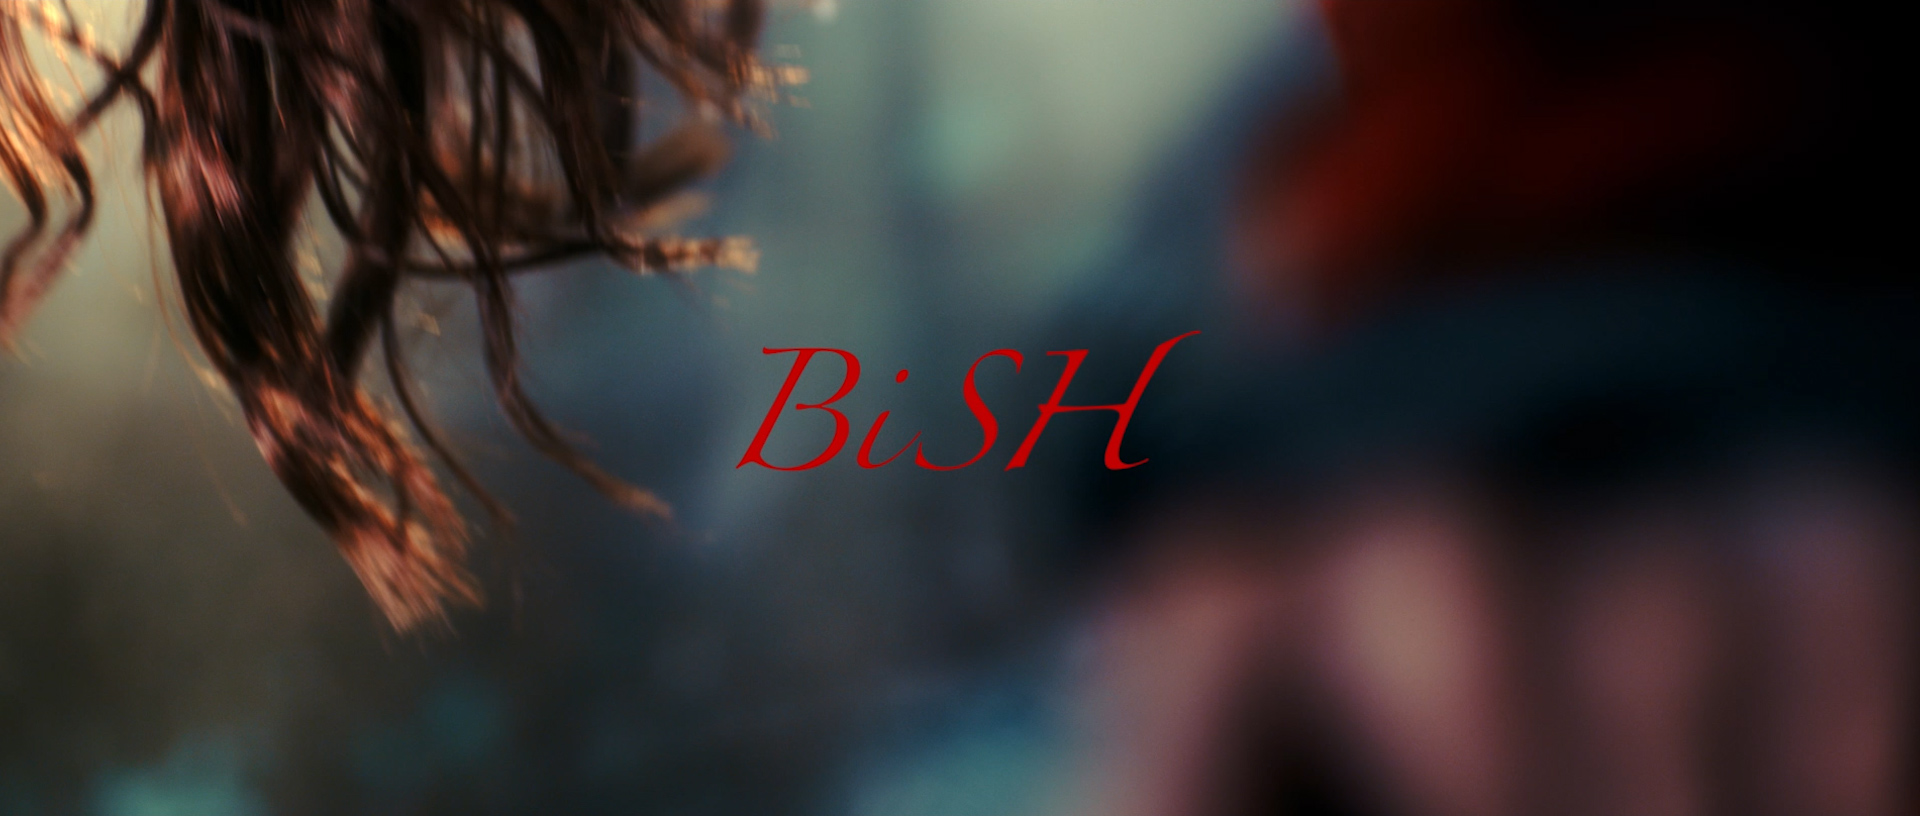 BiSH capture01